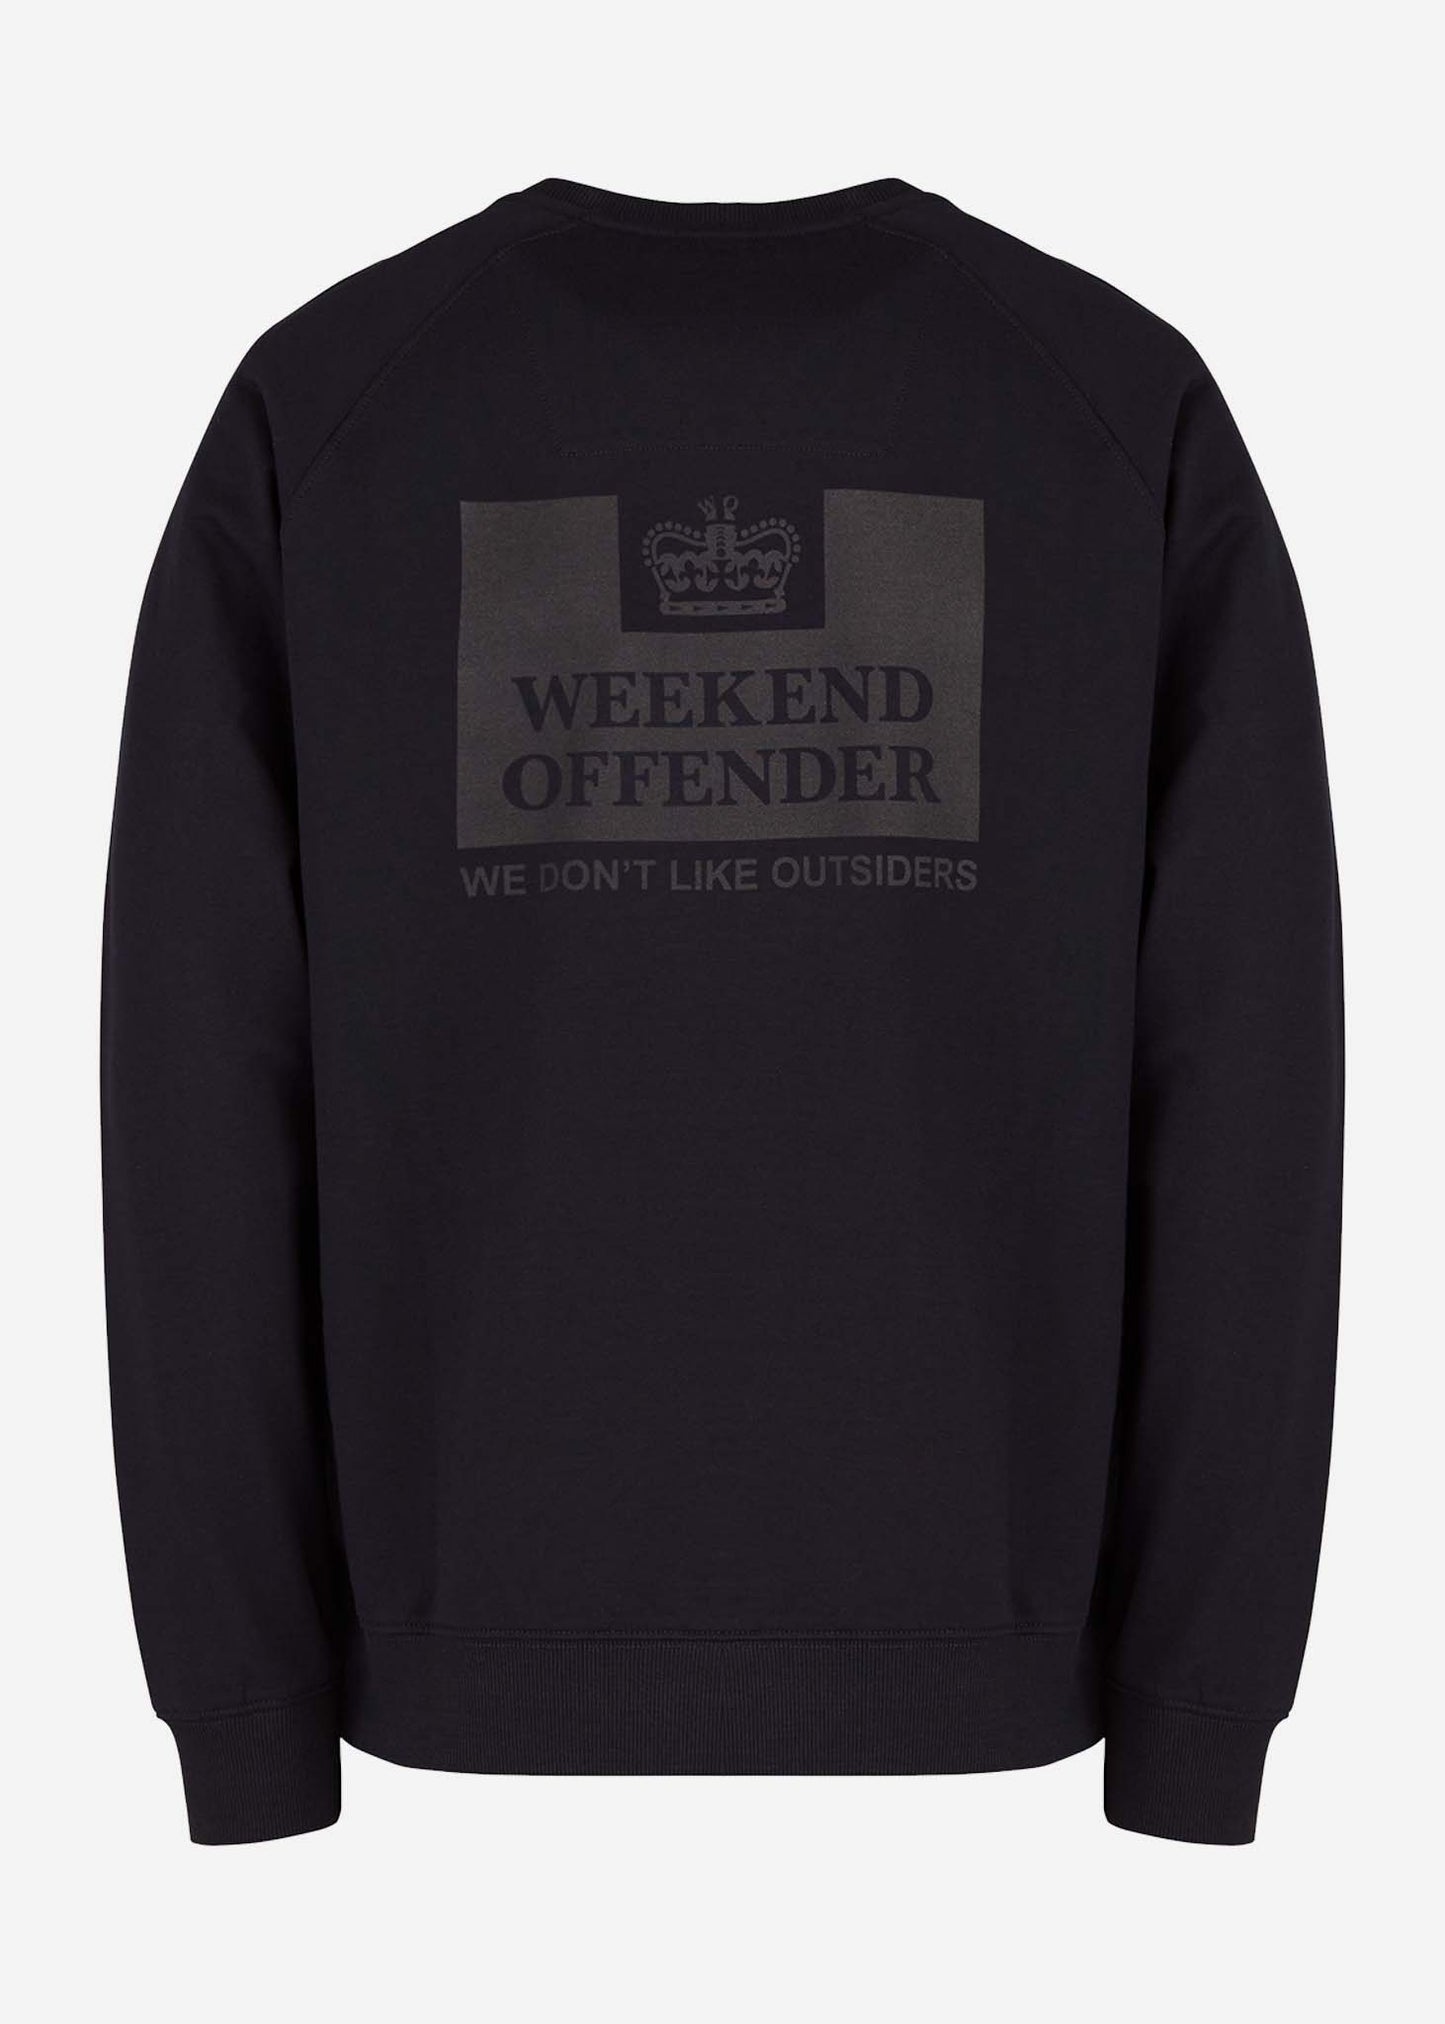 weekend offender sweater crewneck navy